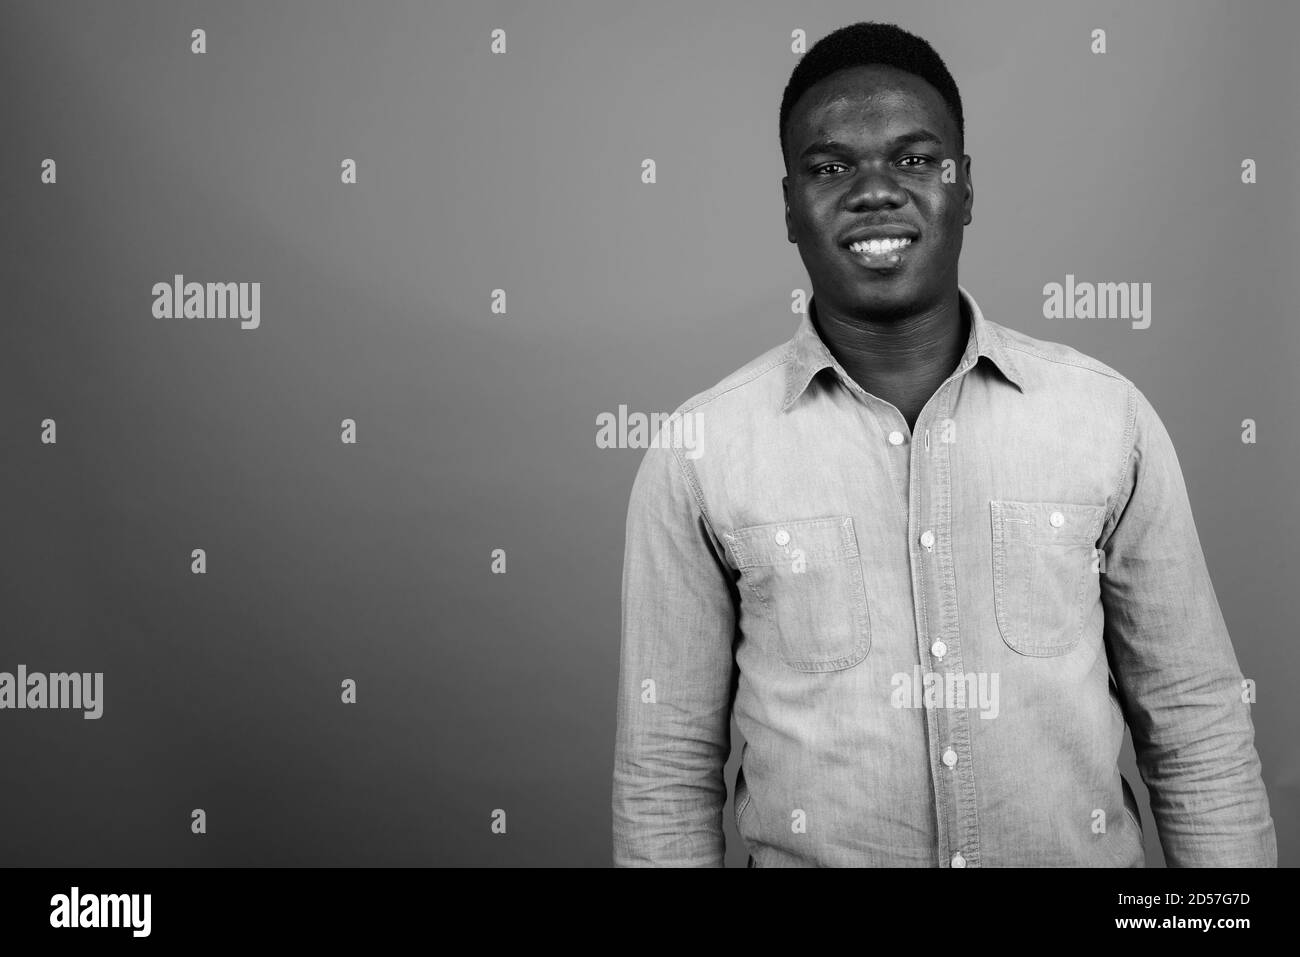 Happy young African man wearing denim shirt Stock Photo